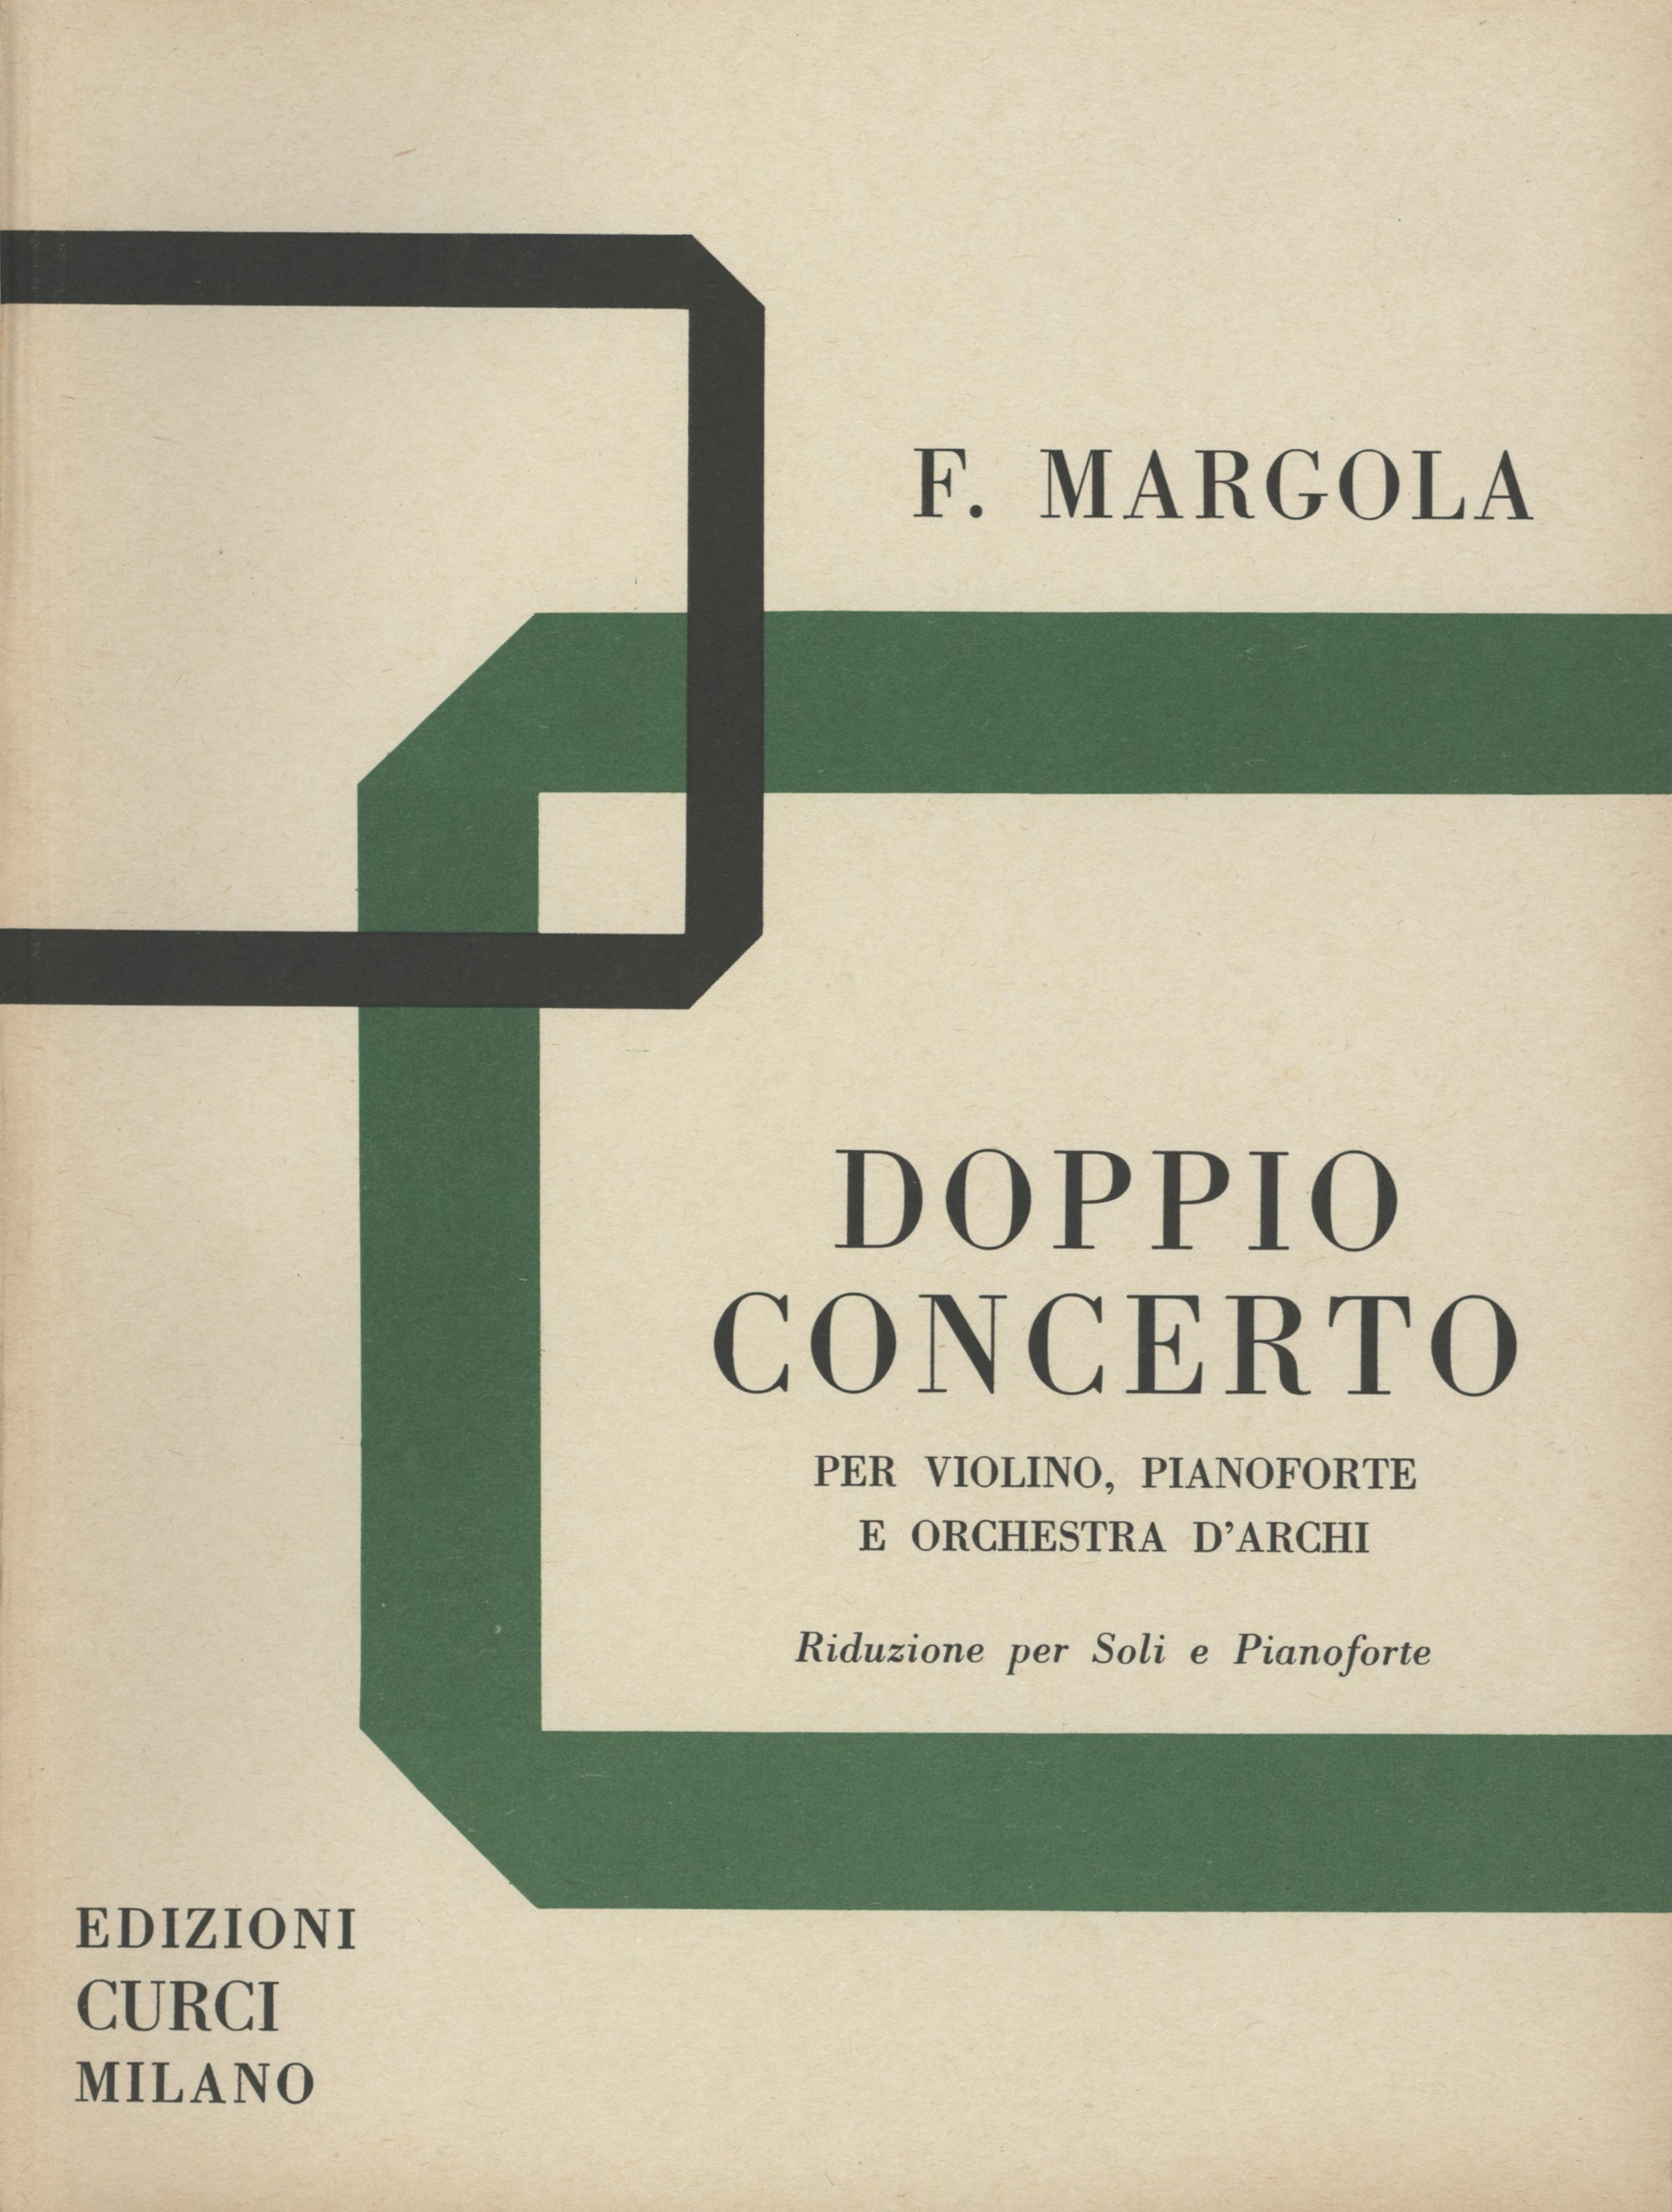 Margola: Double Concerto for Violin, Piano, and String Orchestra